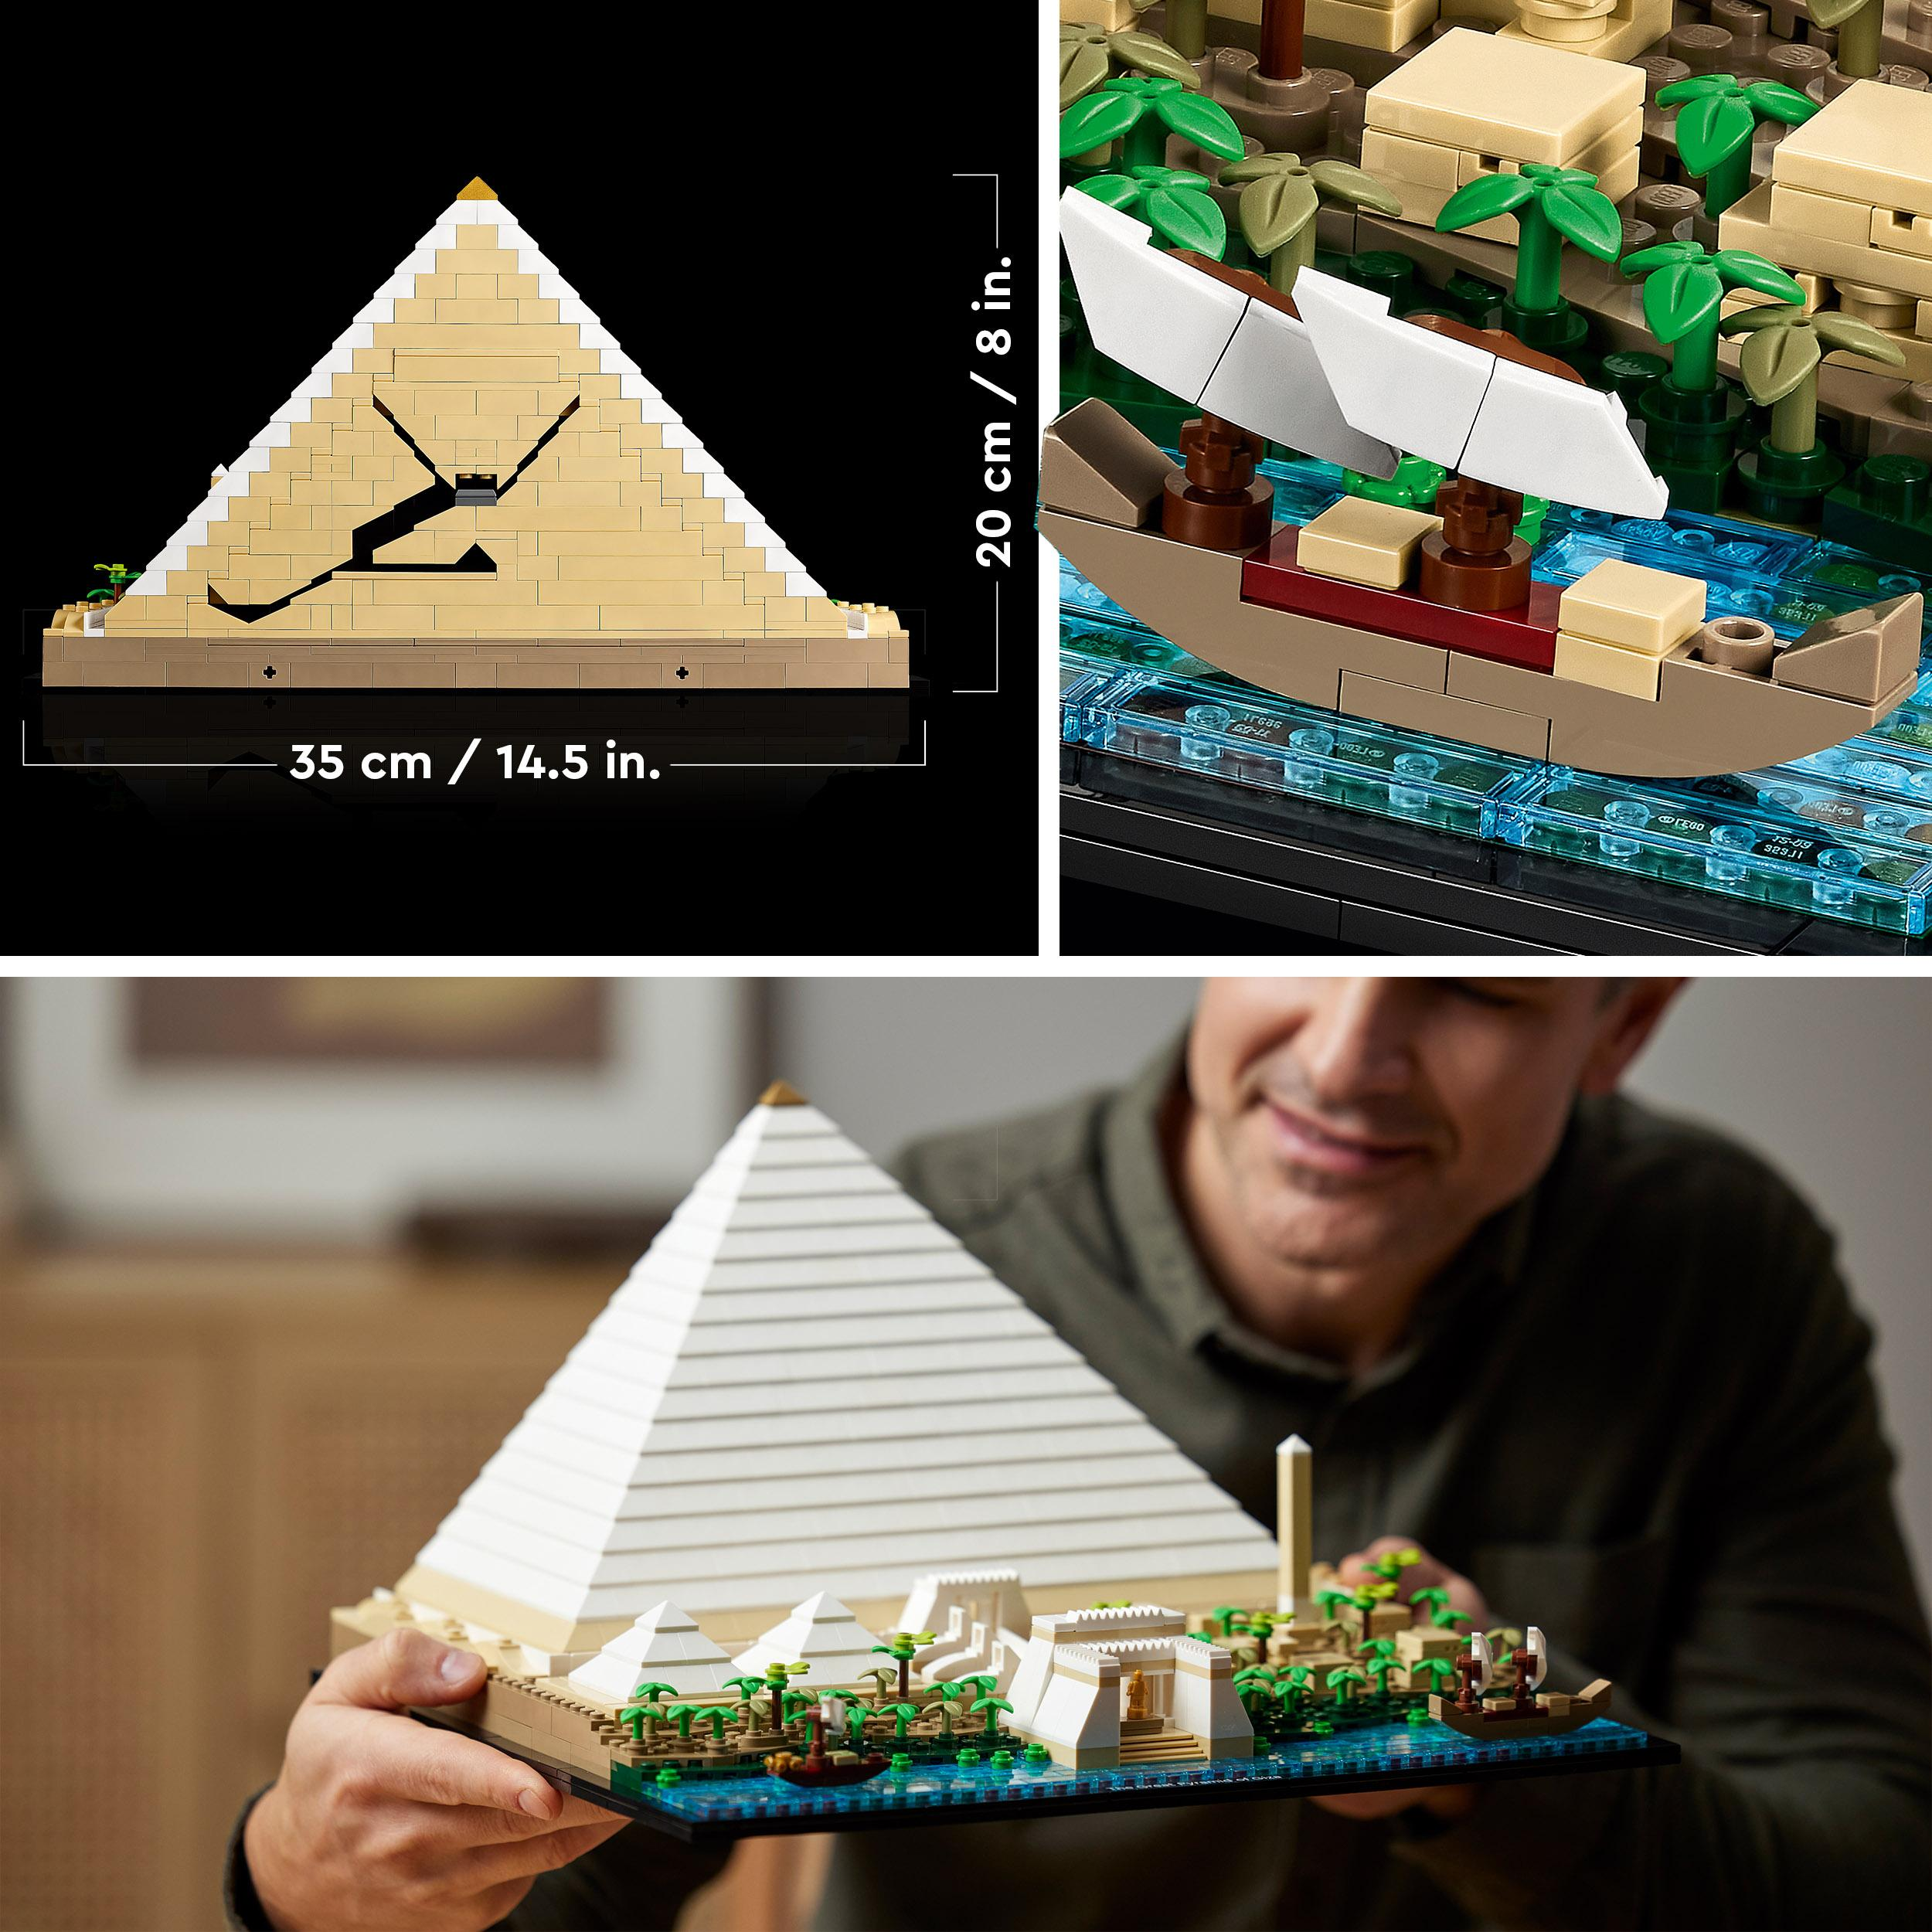 Cheops-Pyramide 21058 Bausatz, LEGO Architecture Mehrfarbig